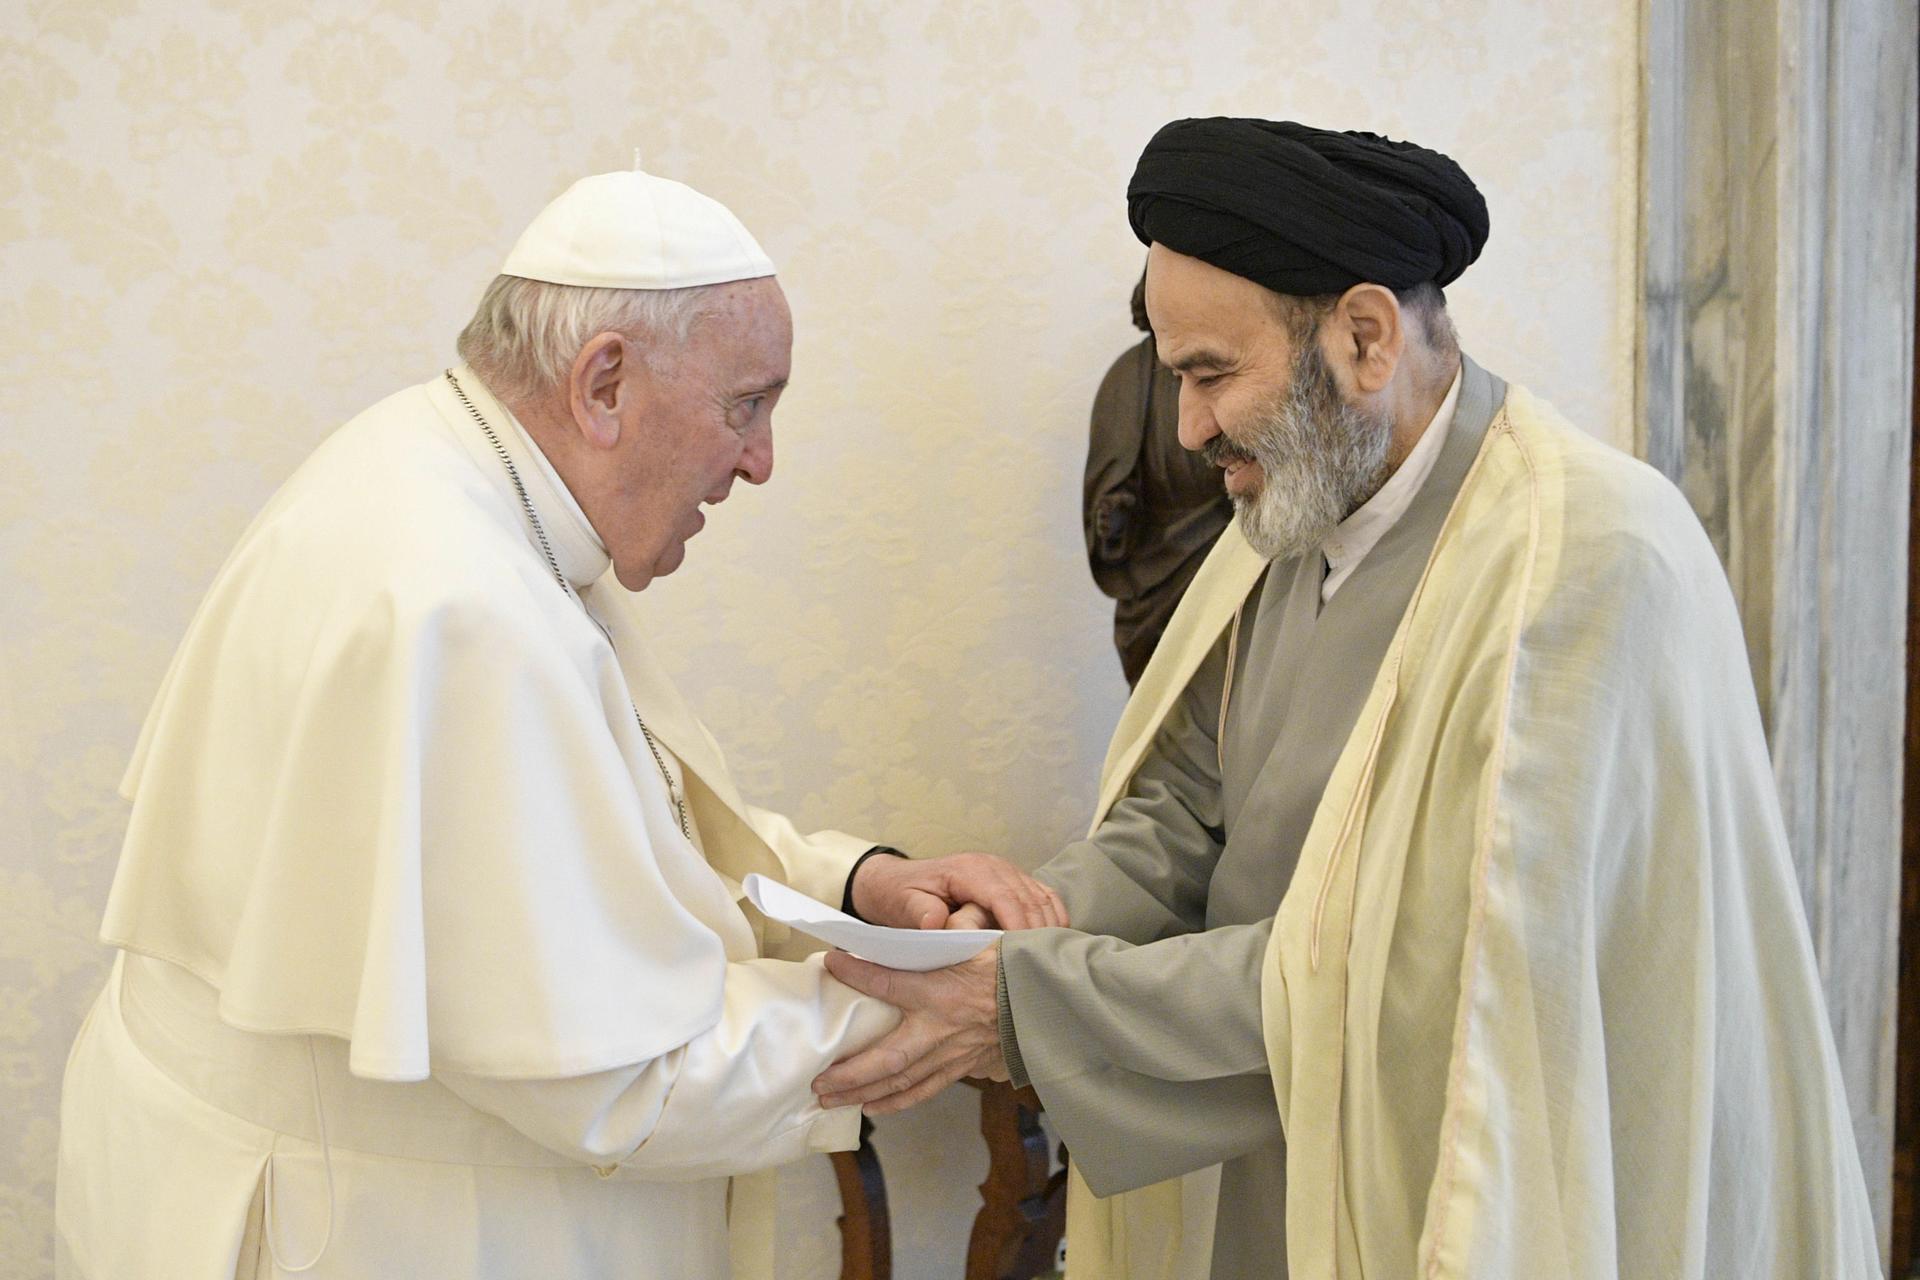 El papa Francisco abrió la puerta a “revisar” el celibato en la Iglesia